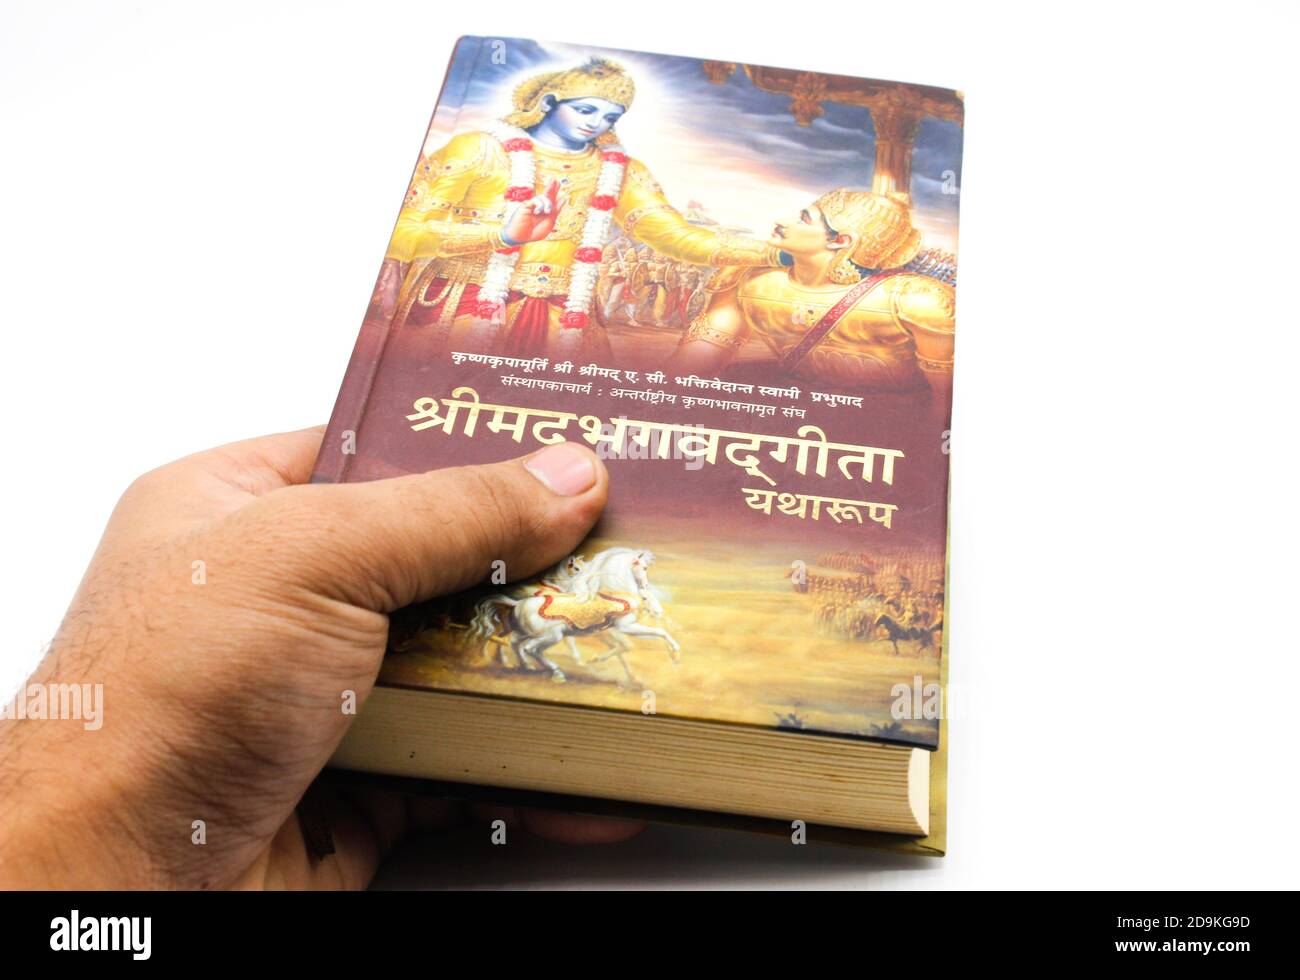 Bhagavad gita book hi-res stock photography and images - Alamy